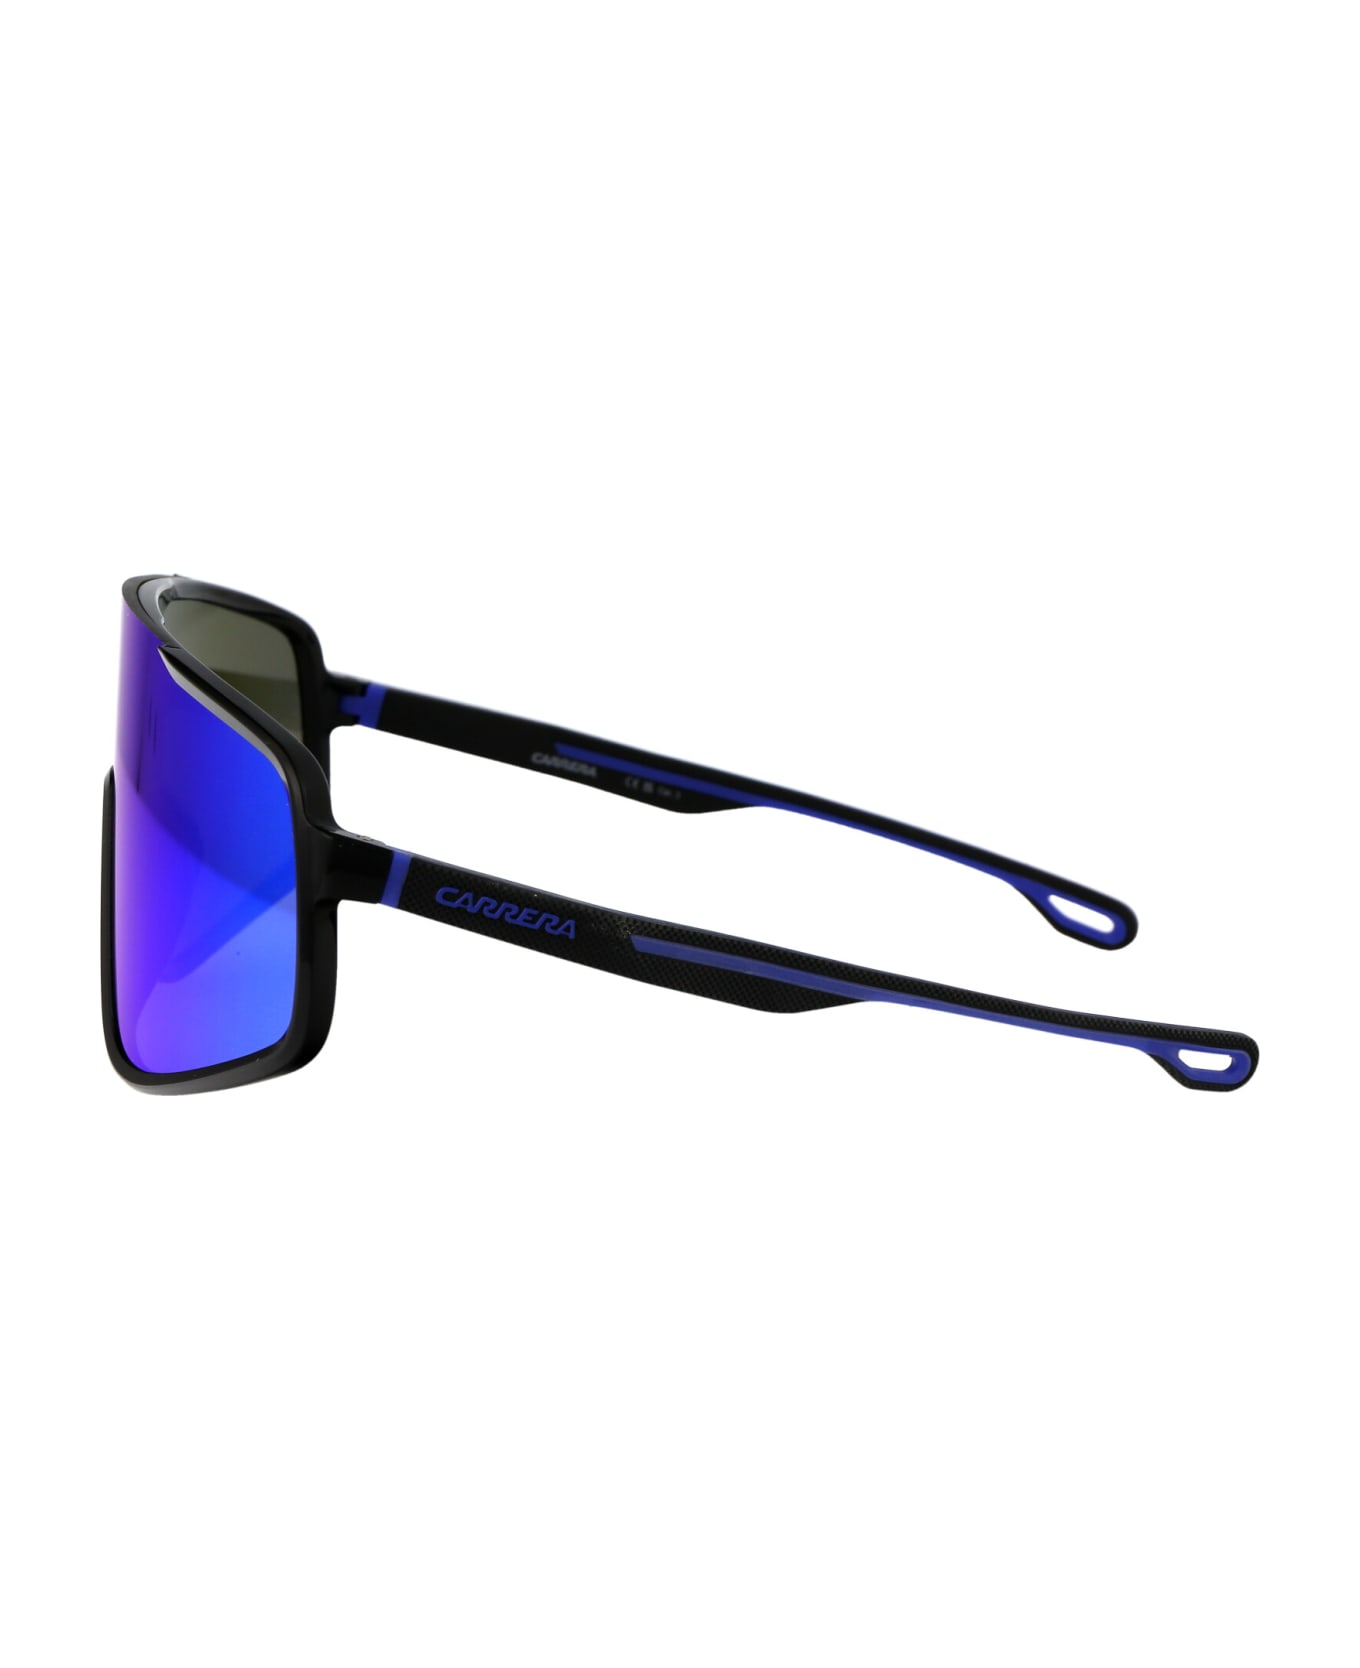 Carrera 4017/s Sunglasses - D51Z0 BLK BLUE B